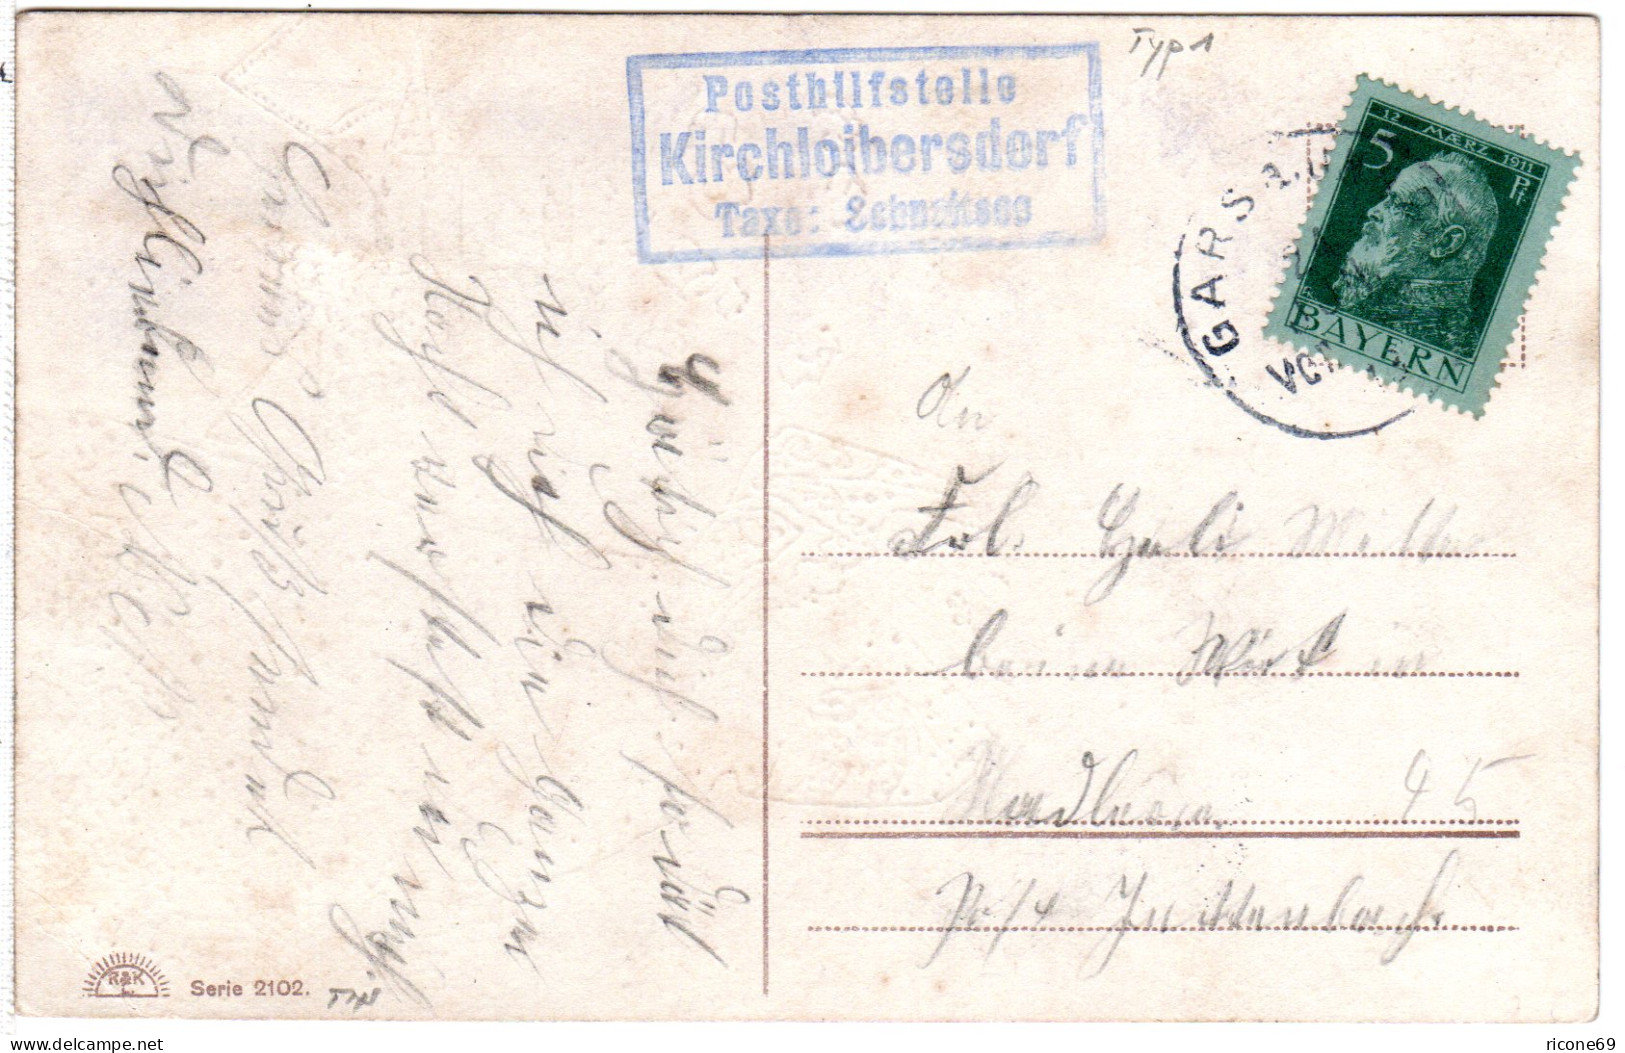 Bayern 1913, Posthilfstelle KIRCHLOIBERSDORF Taxe Schnaitsee Auf Karte M. 5 Pf. - Cartas & Documentos